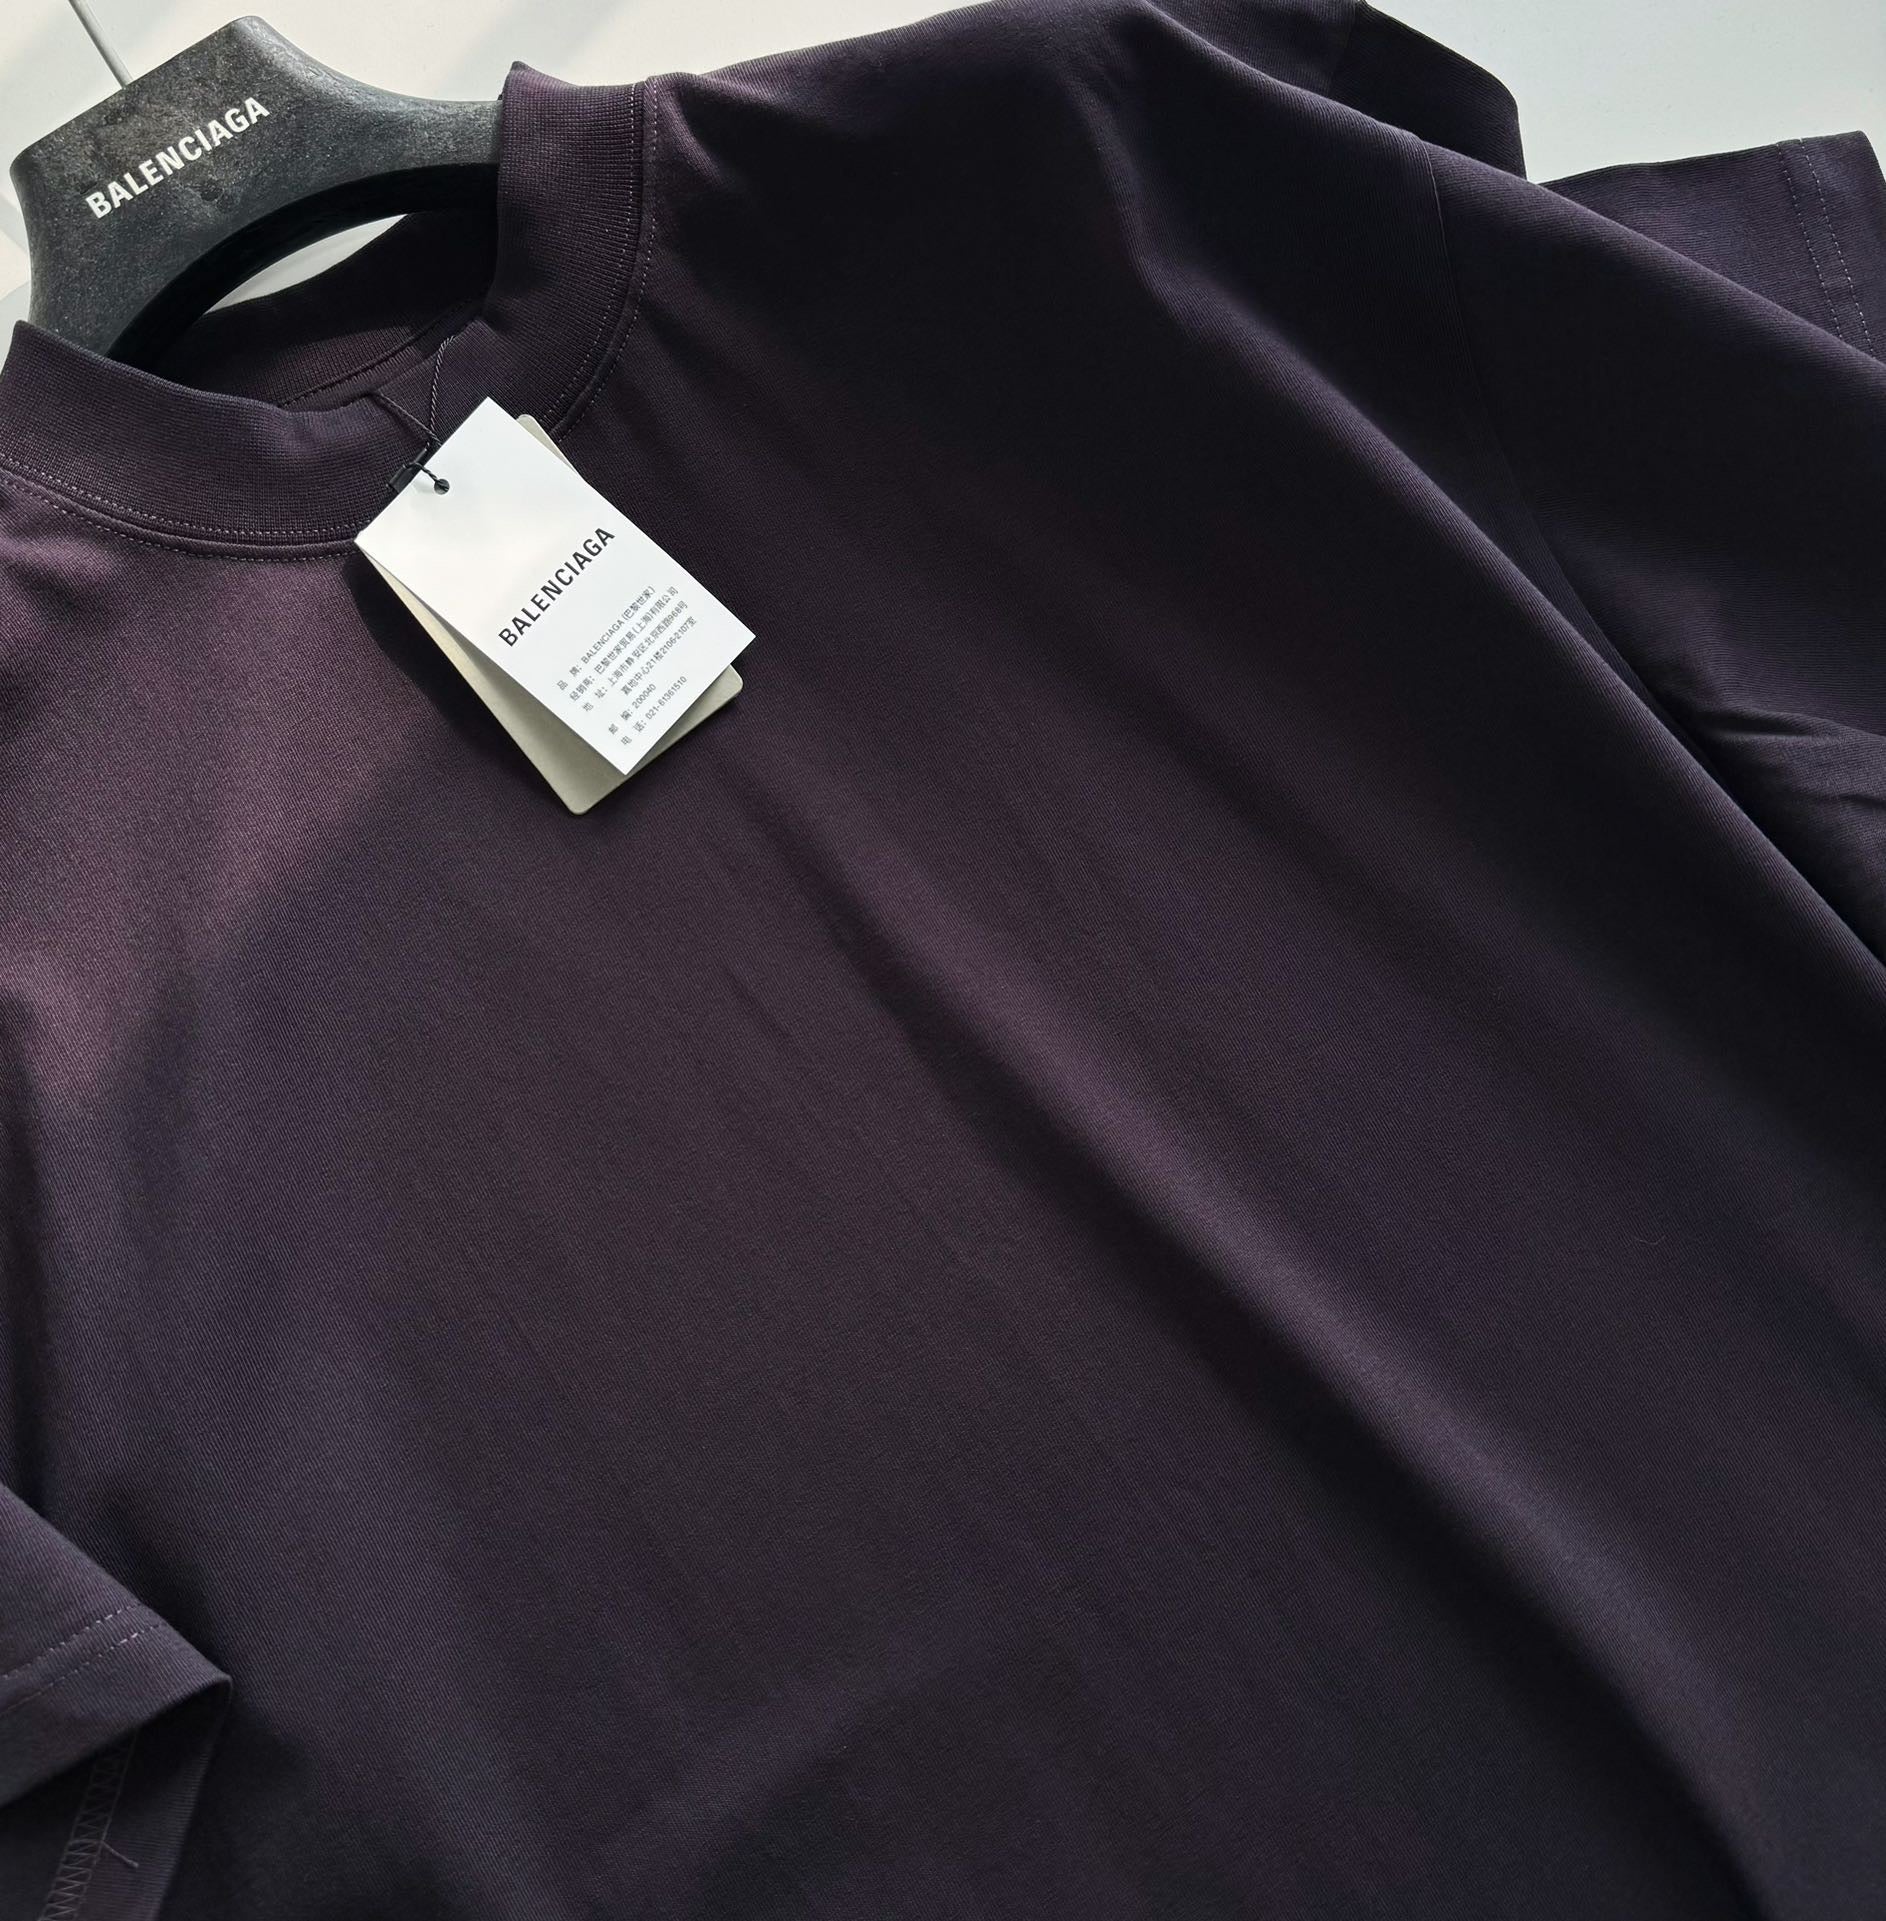 Black purple and White T-shirt